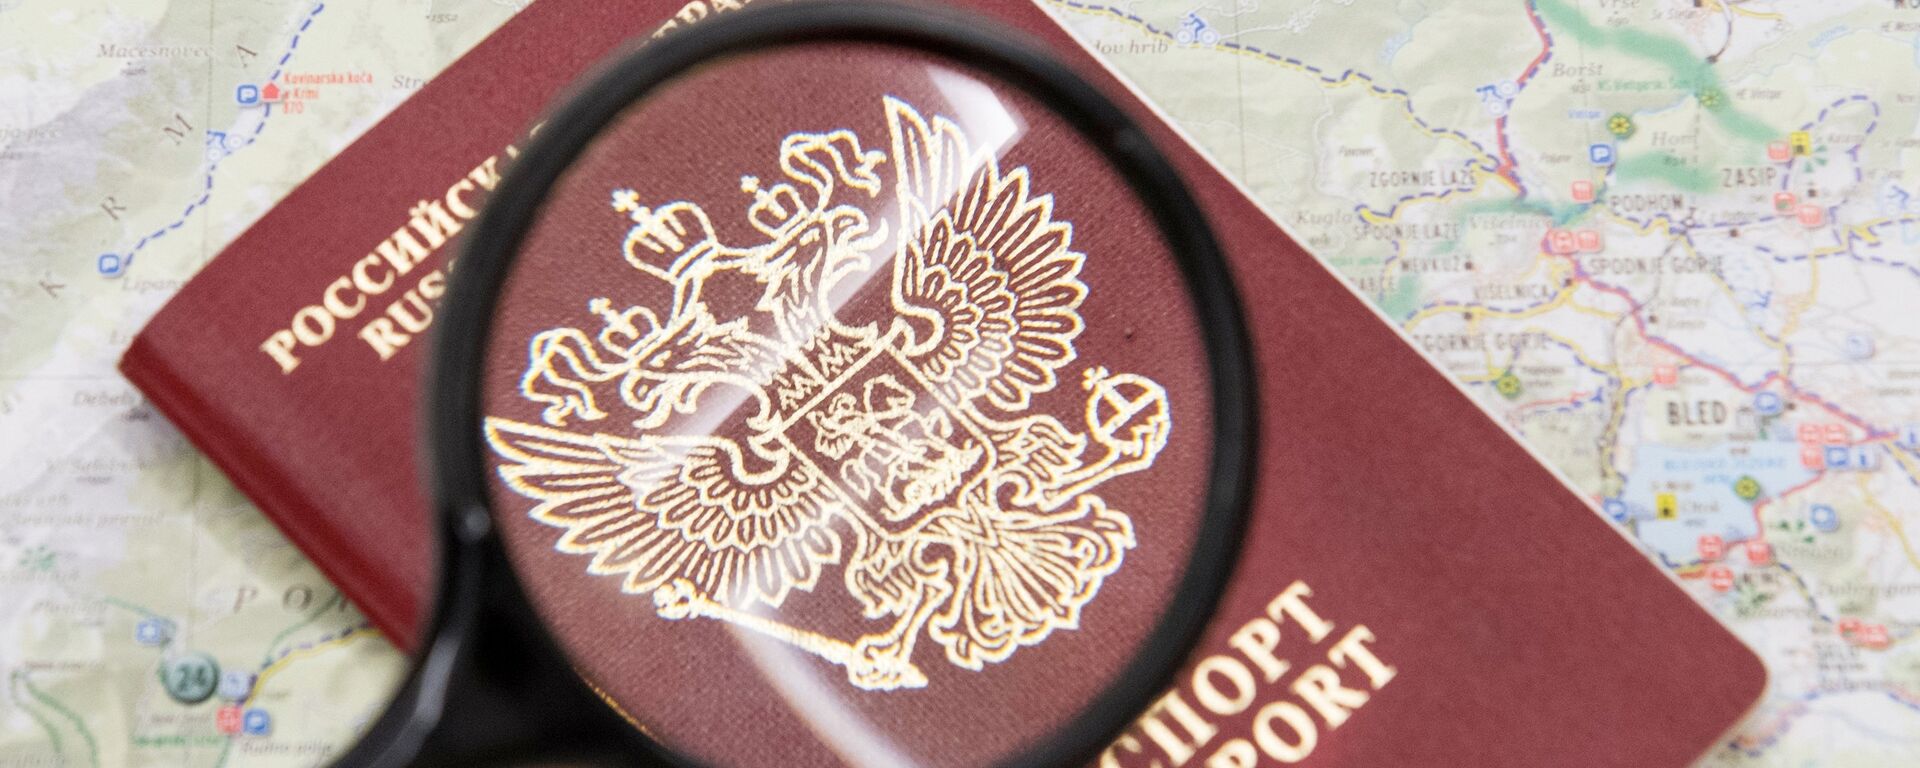 Un pasaporte ruso - Sputnik Mundo, 1920, 09.06.2022